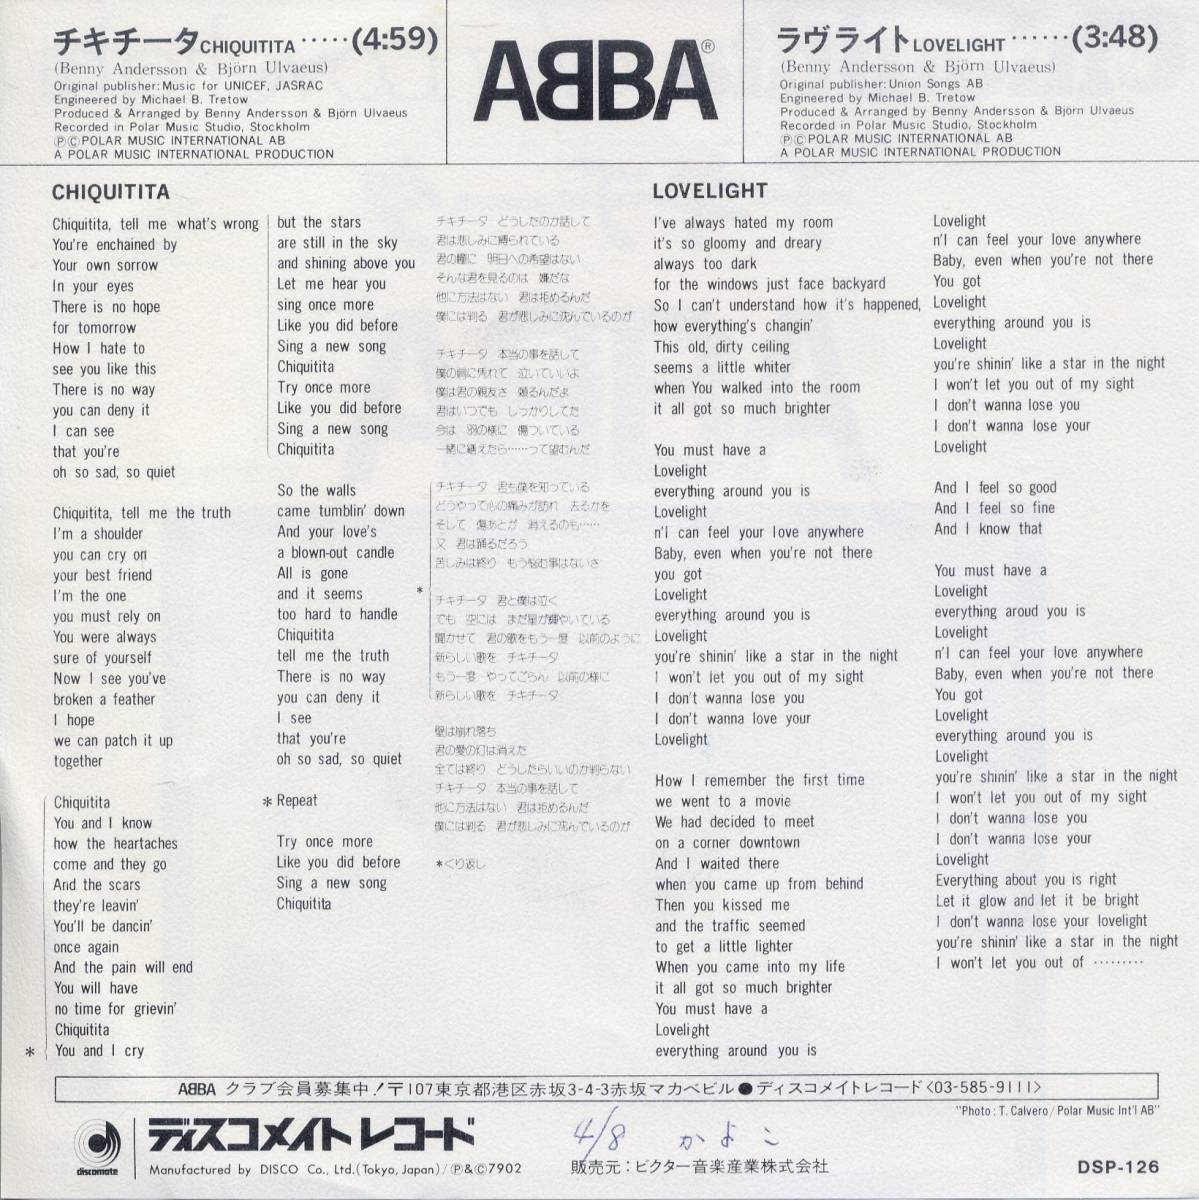 chikichi-ta|aba( single * record ) Chiquitita|ABBA